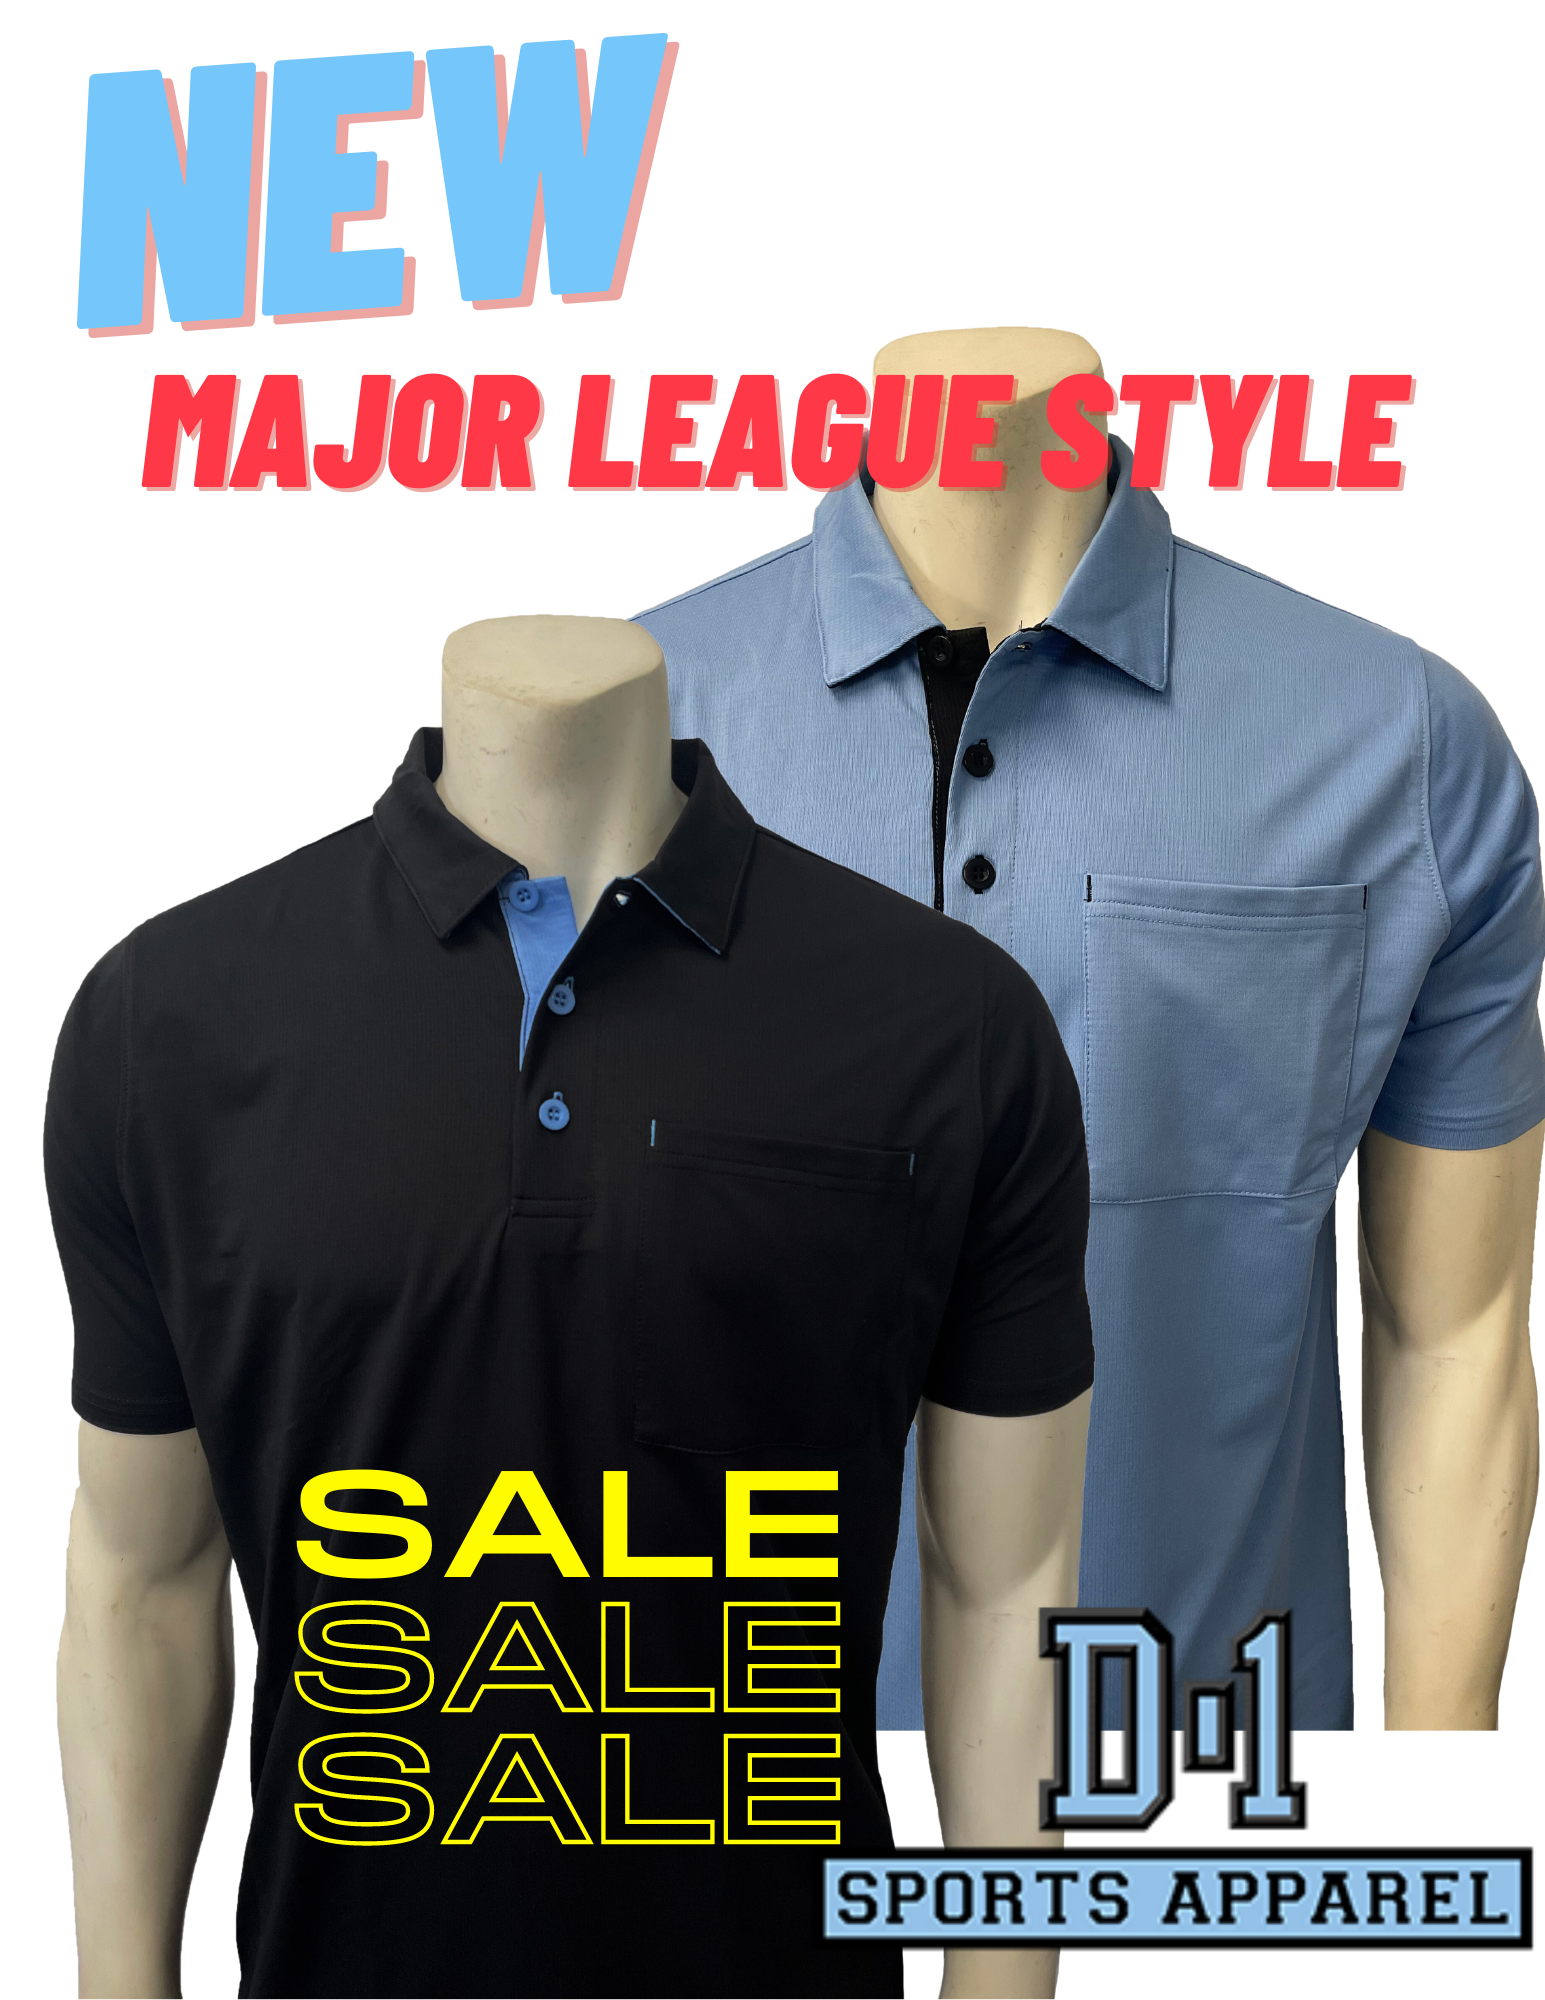 NEW MAJOR LEAGUE STYLE Short Sleeve Umpire Shirts.